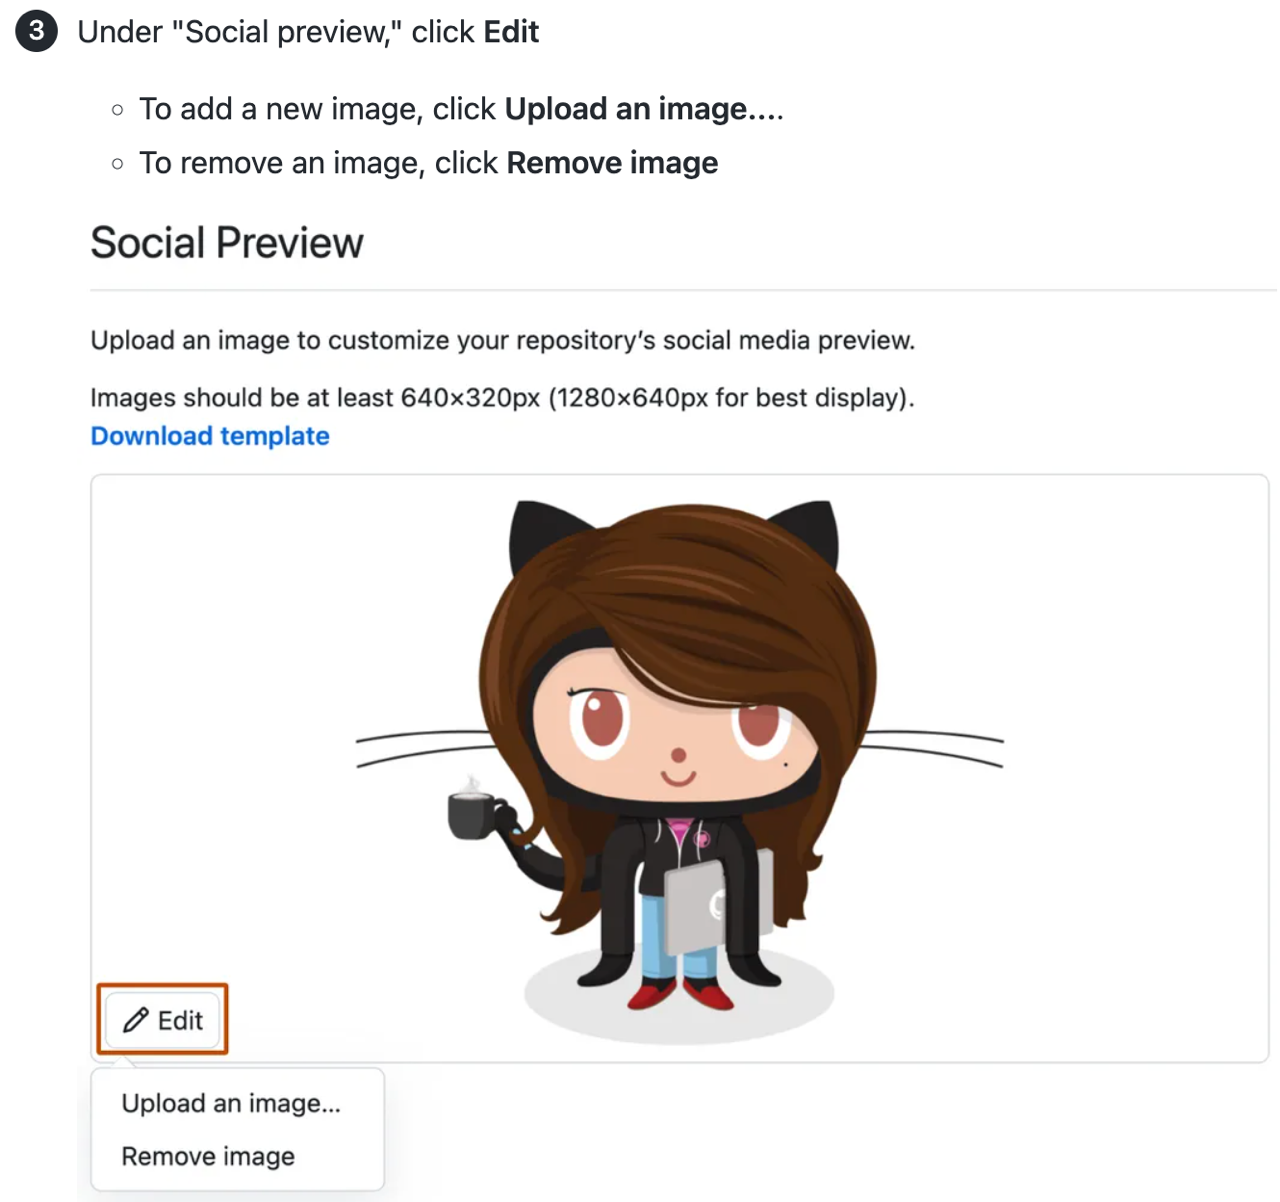 GitHub リポジトリ上のソーシャル メディア画像を編集するためのテキストによる指示と UI のスクリーンショットを示す記事のスクリーンショット。